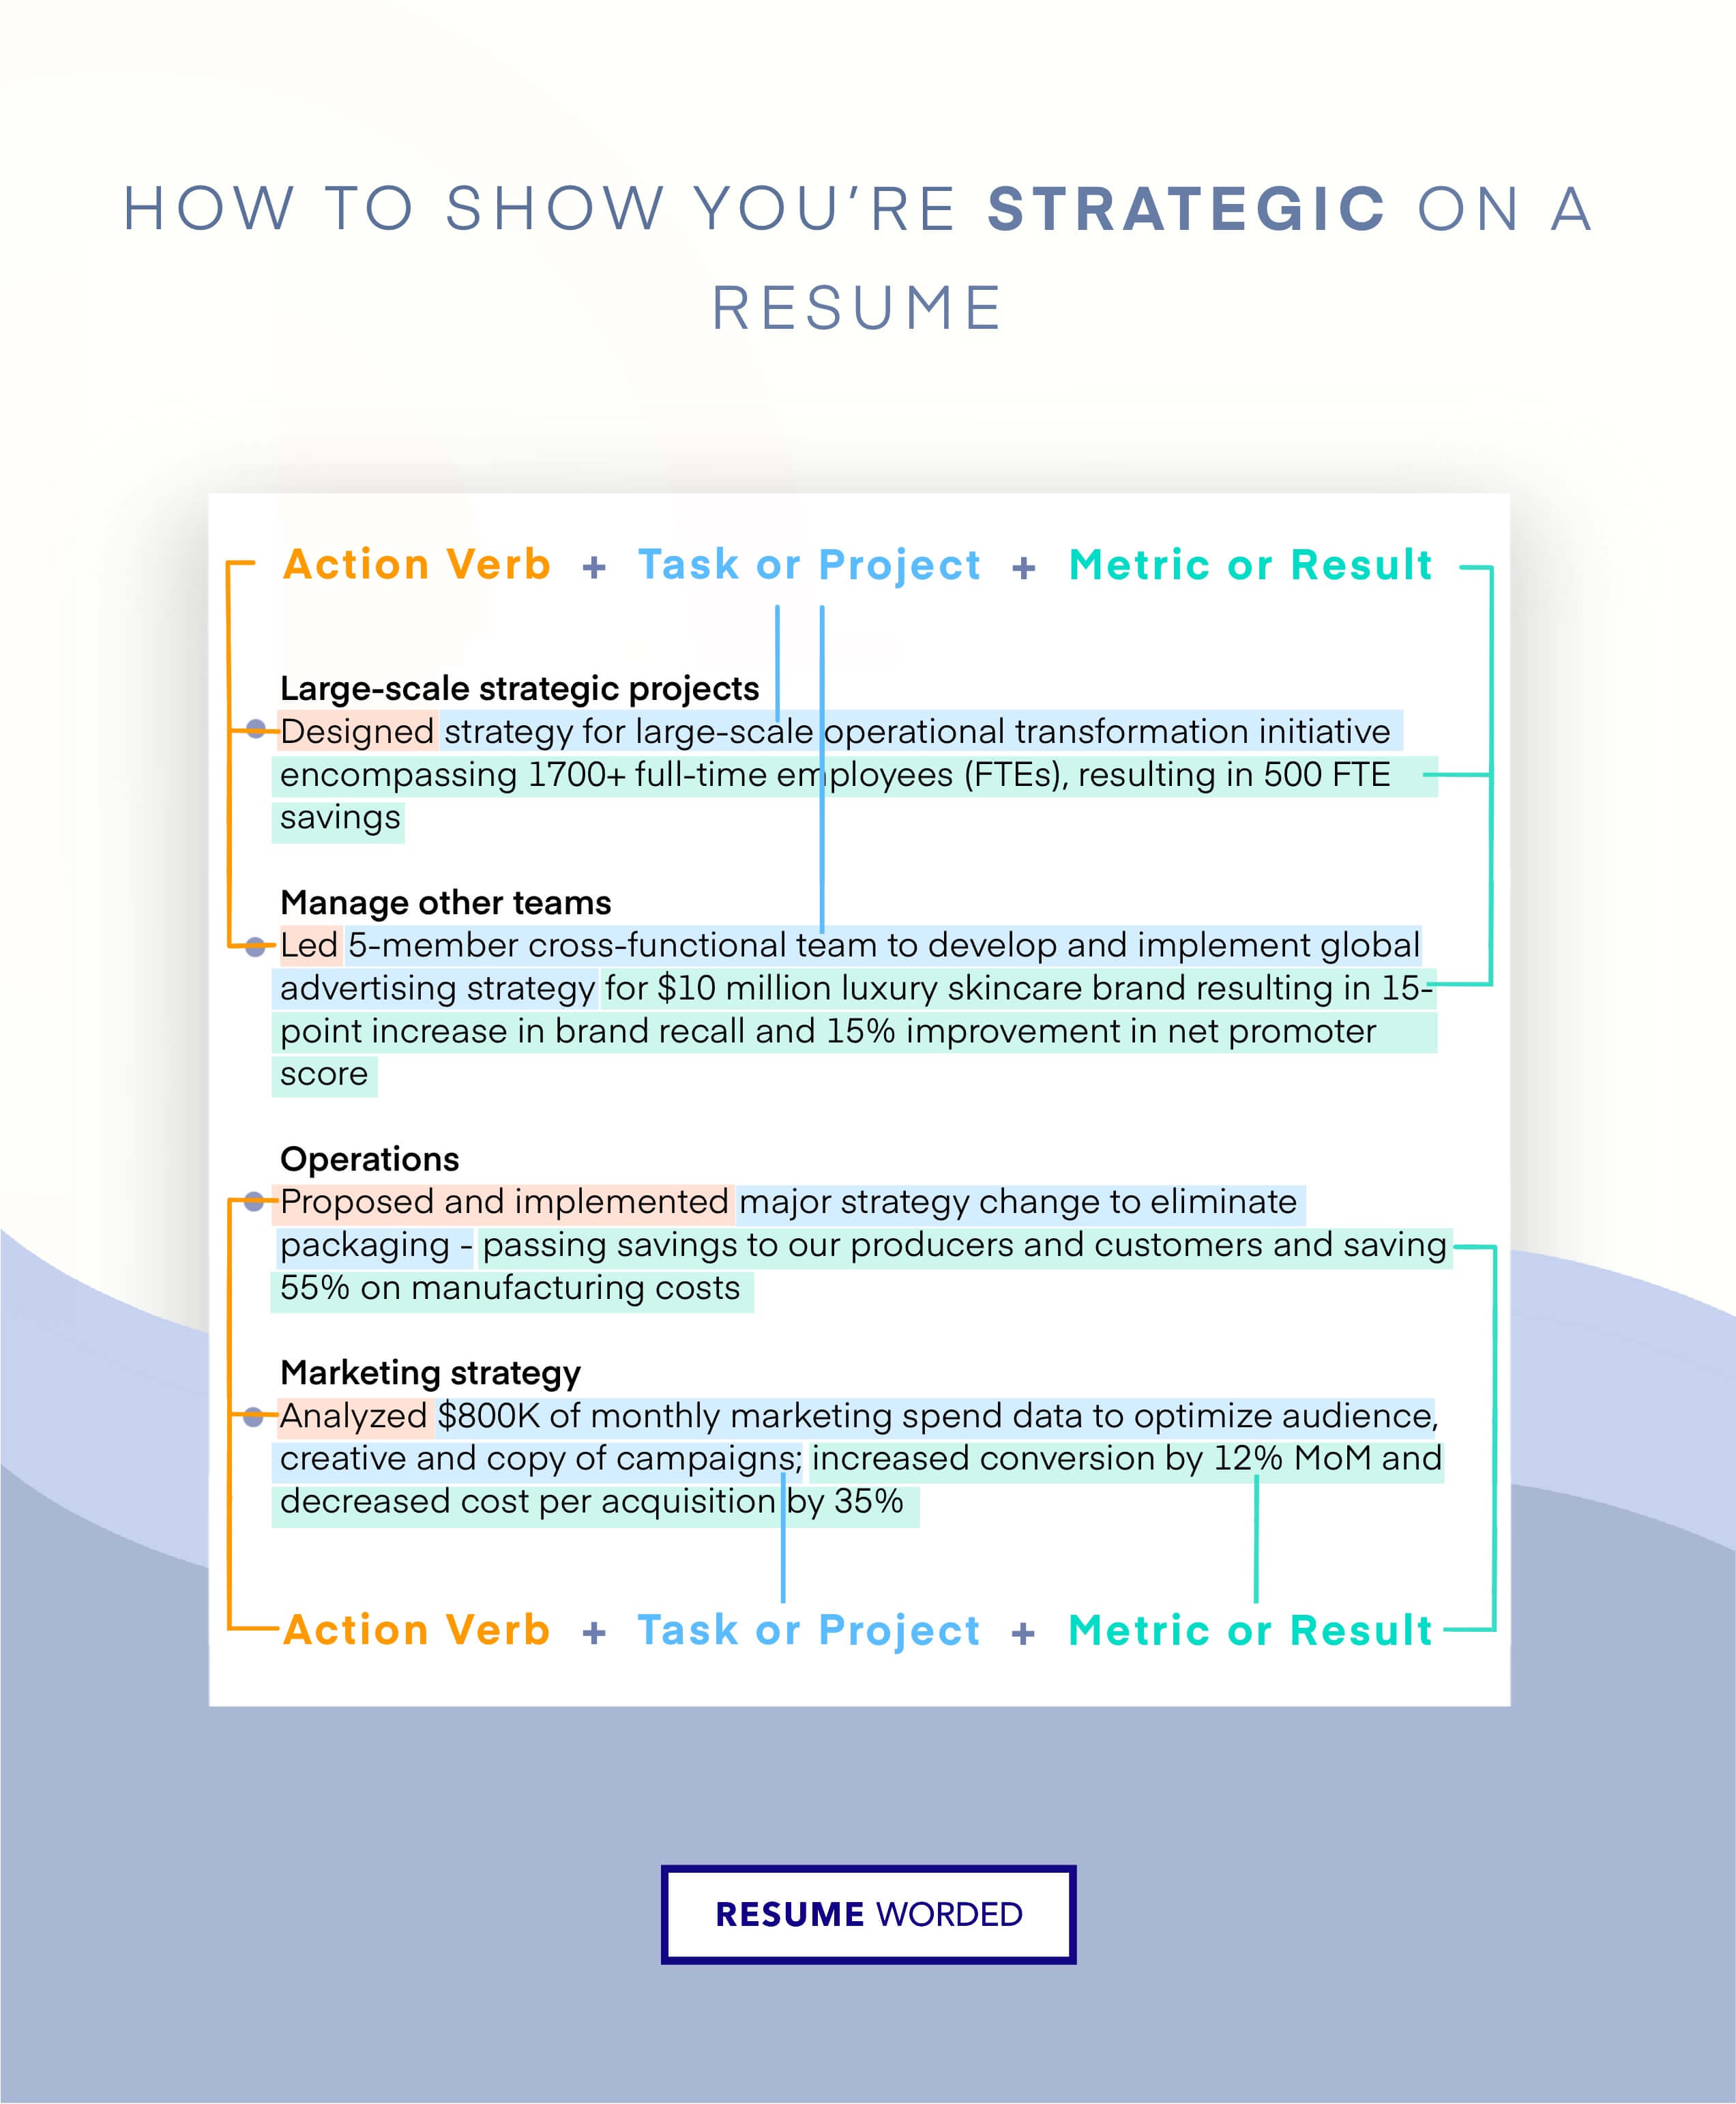 Showcase strategic partnerships - Human Resources (HR) Business Partner Resume